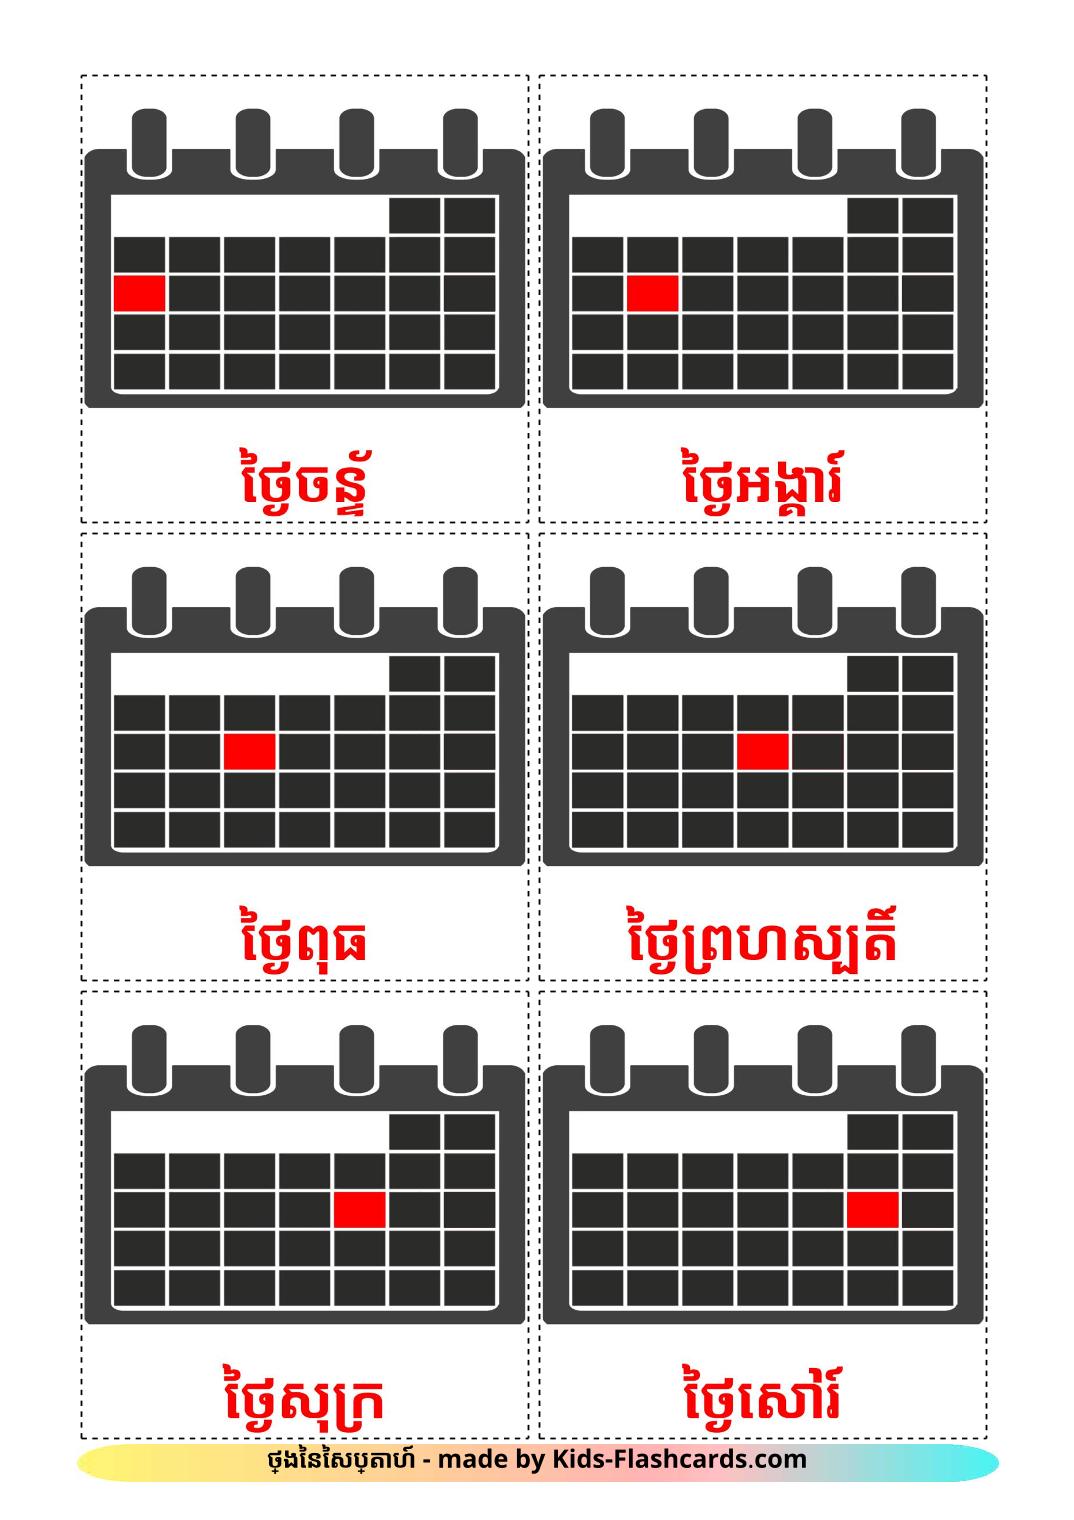 Días de la semana - 12 fichas de khmer para imprimir gratis 